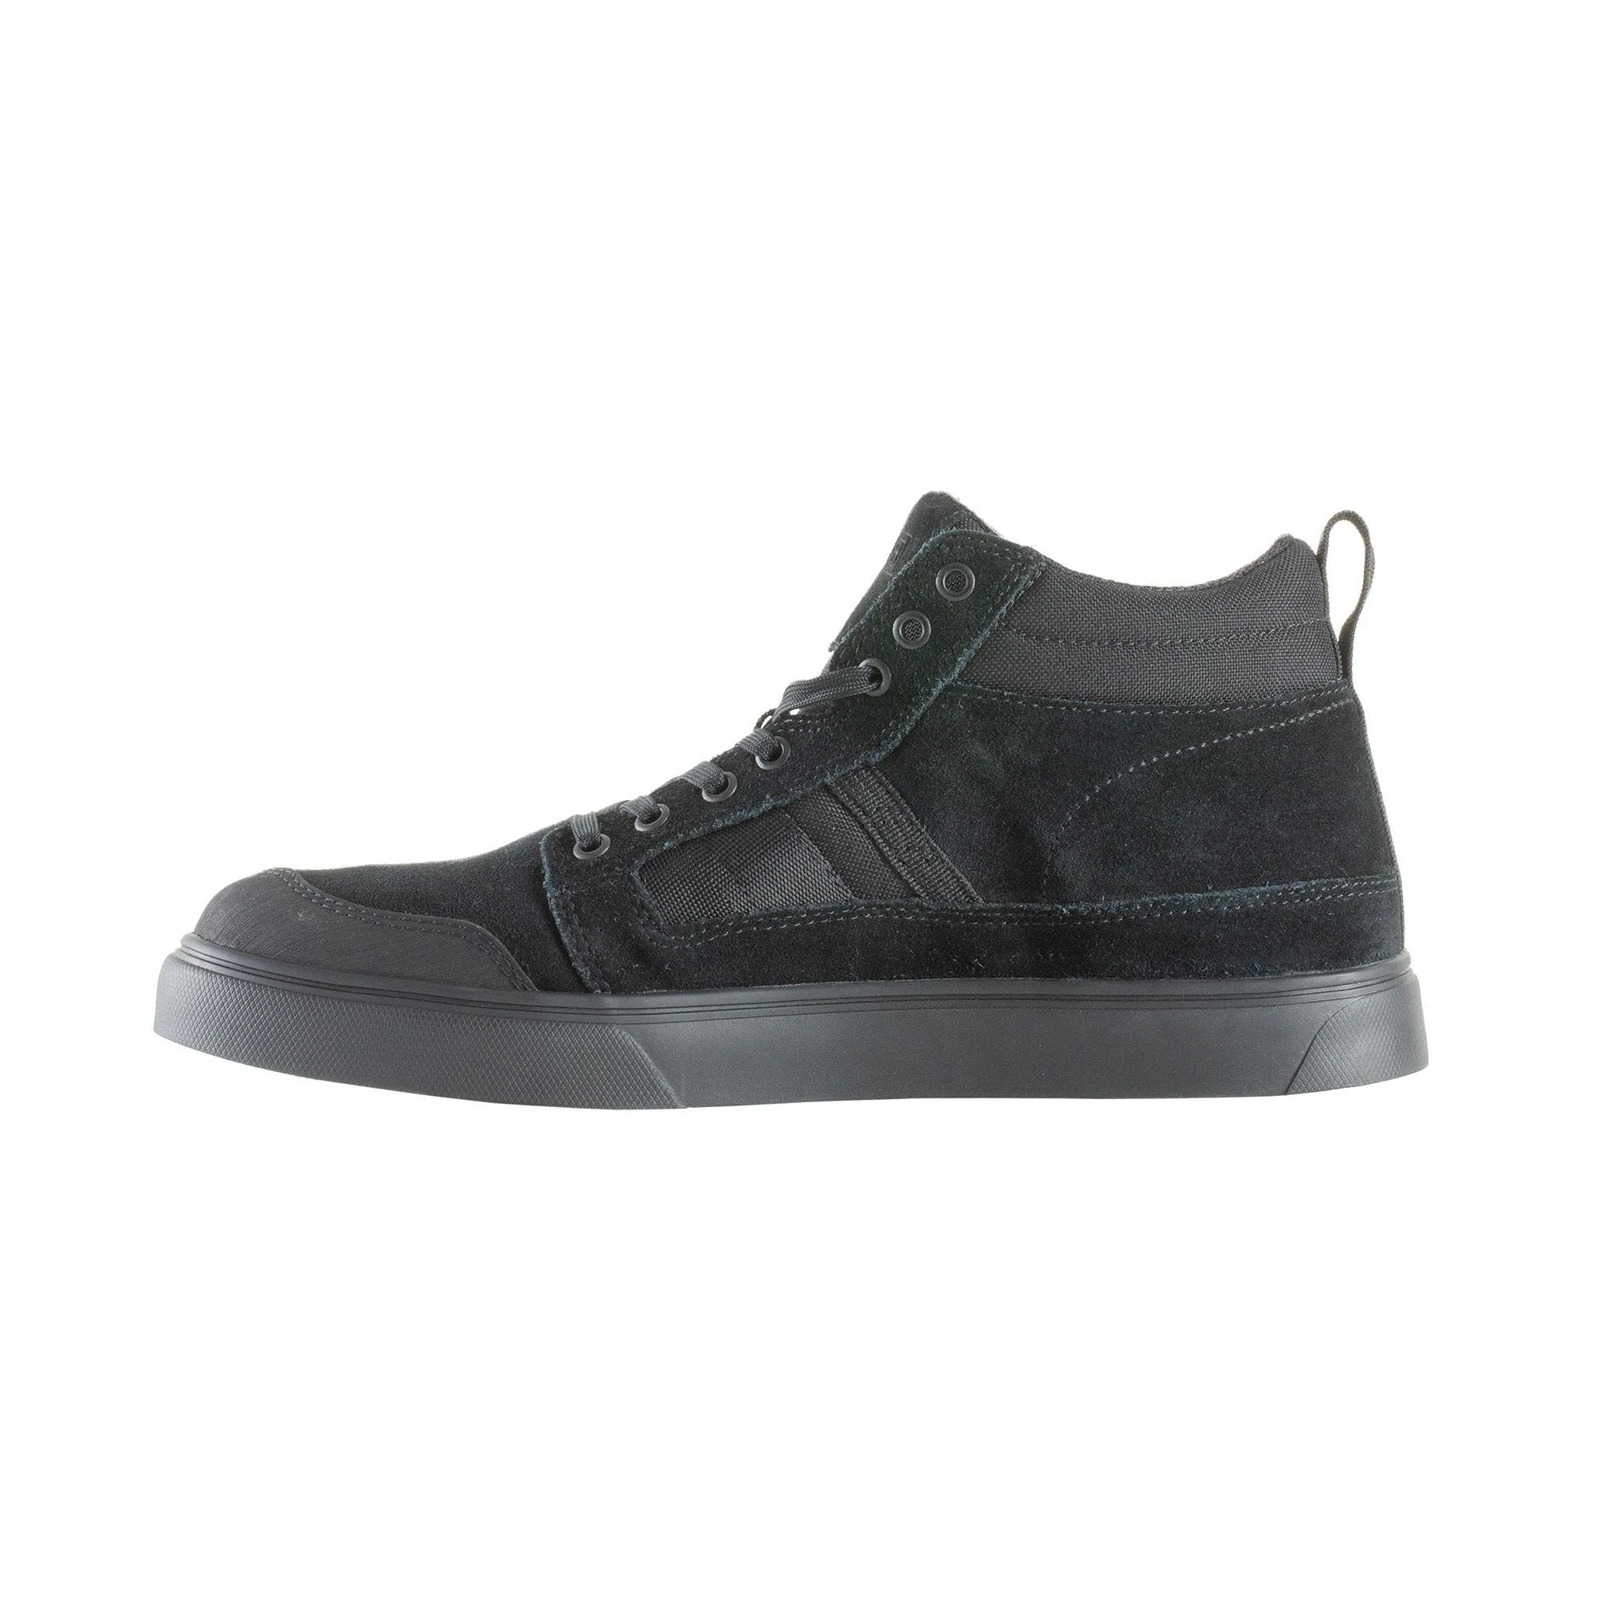 5.11 Tactical Norris Sneaker - Black